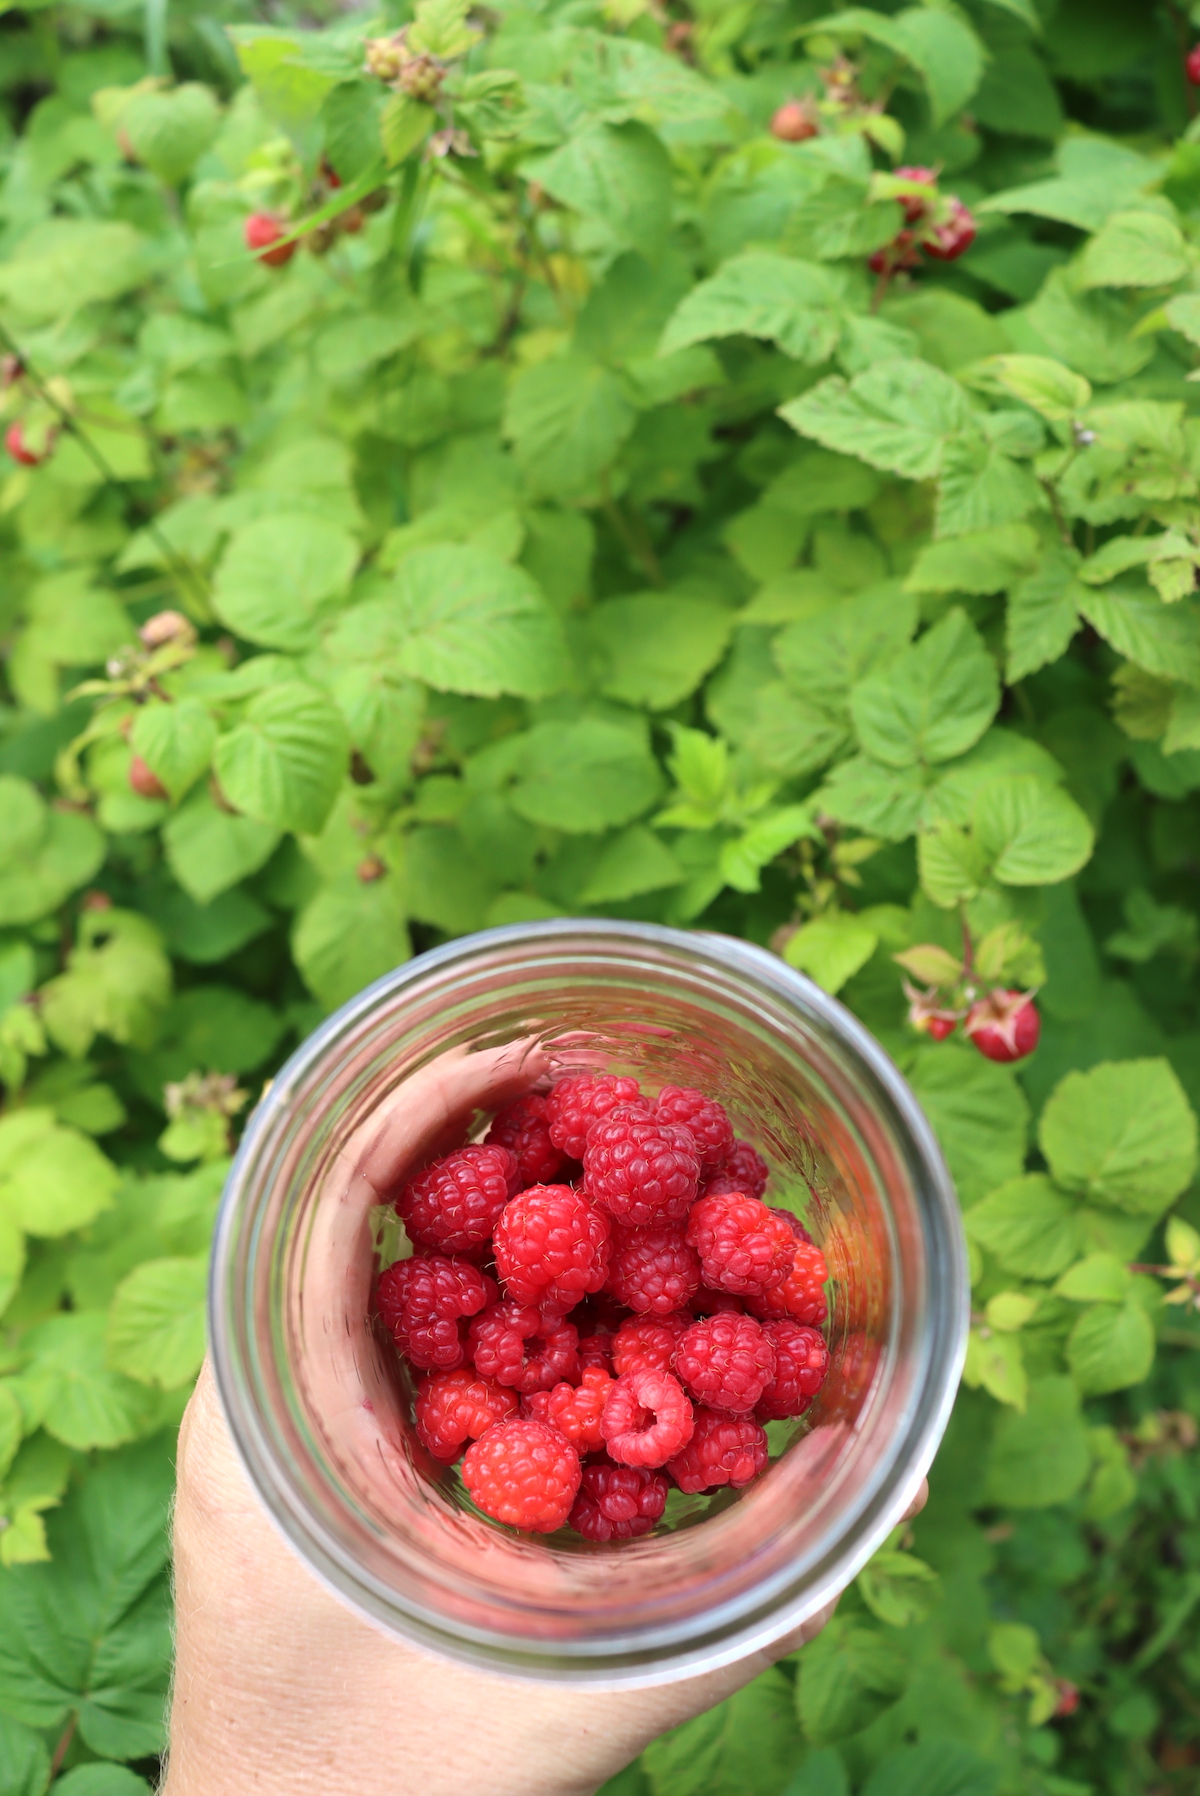 Harvesting Raspberries for Canning